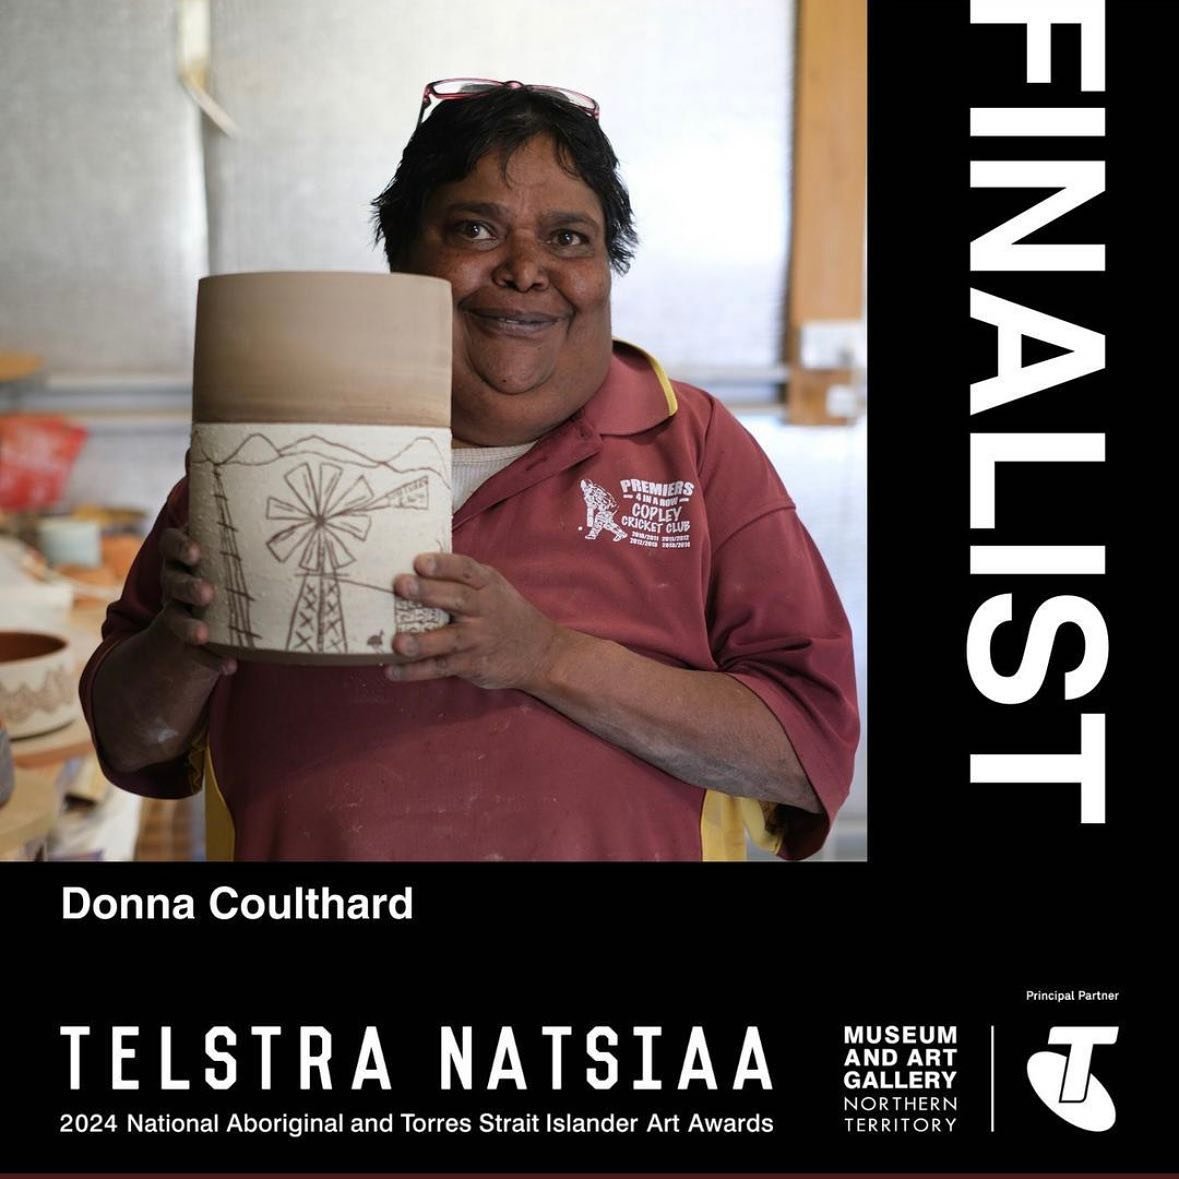 TELSTRA NATSIAA FINALISTS ANNOUNCED // Congratulations to all the Telstra NATSIAA finalists of 2024! ✨ We are incredibly proud to see Donna Coulthard (Adnyamathanha, Kuyani) and Mardawi Lakun (Ngarrindjeri) among the finalists this year! Ku Arts are 